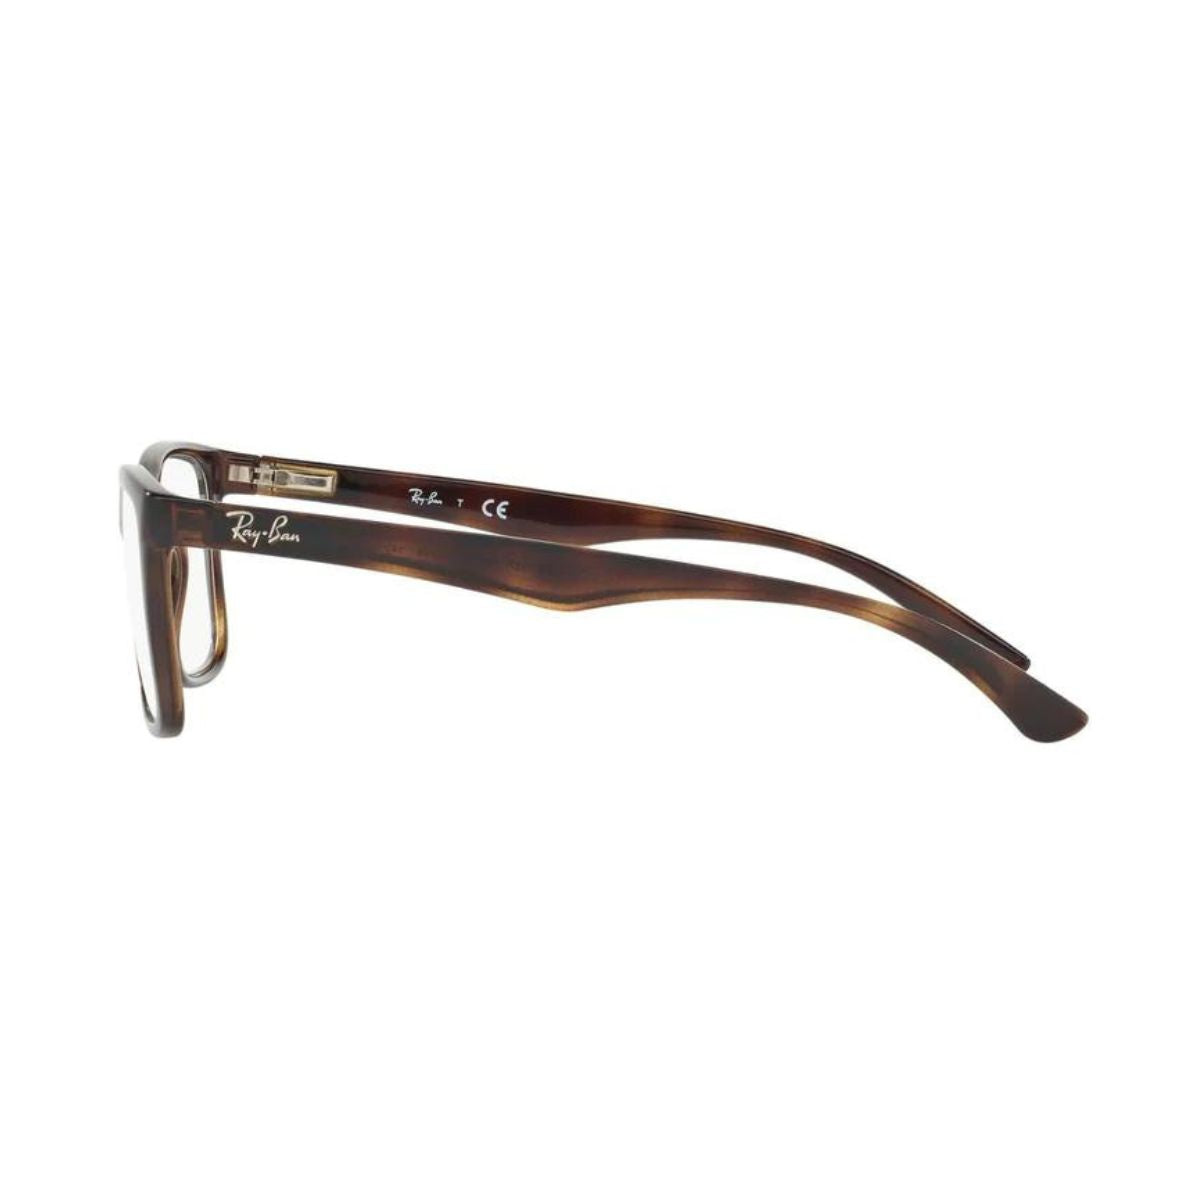 "Rayban 7027I 2012 eye glasses frame for men and women at optorium"